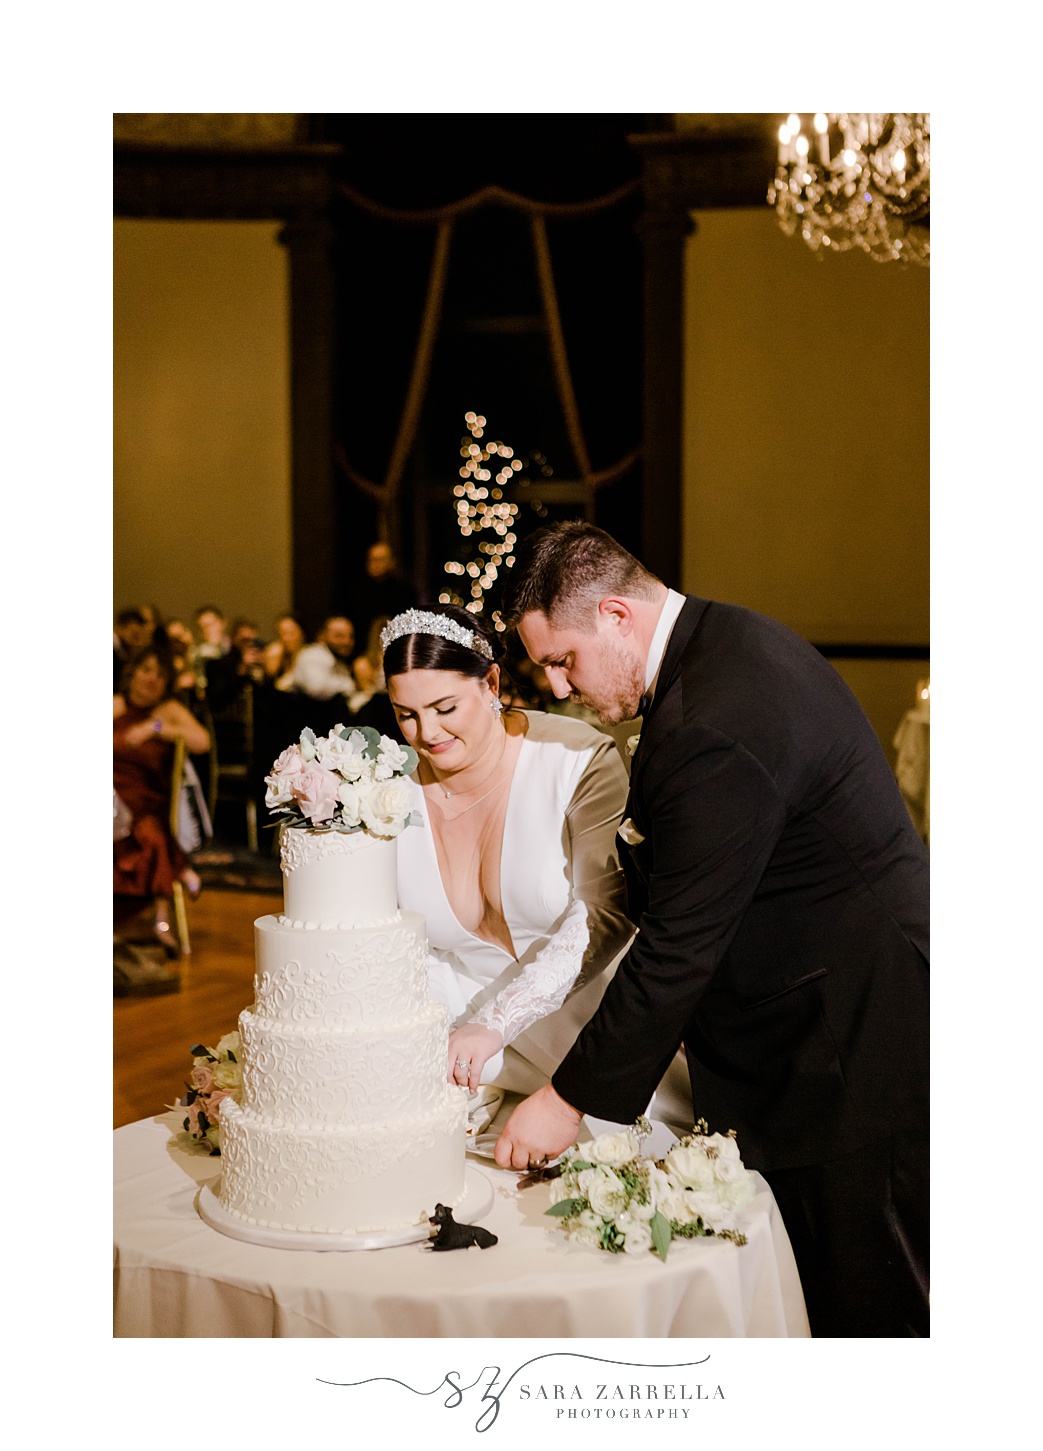 newlyweds cut wedding cake in center of ballroom